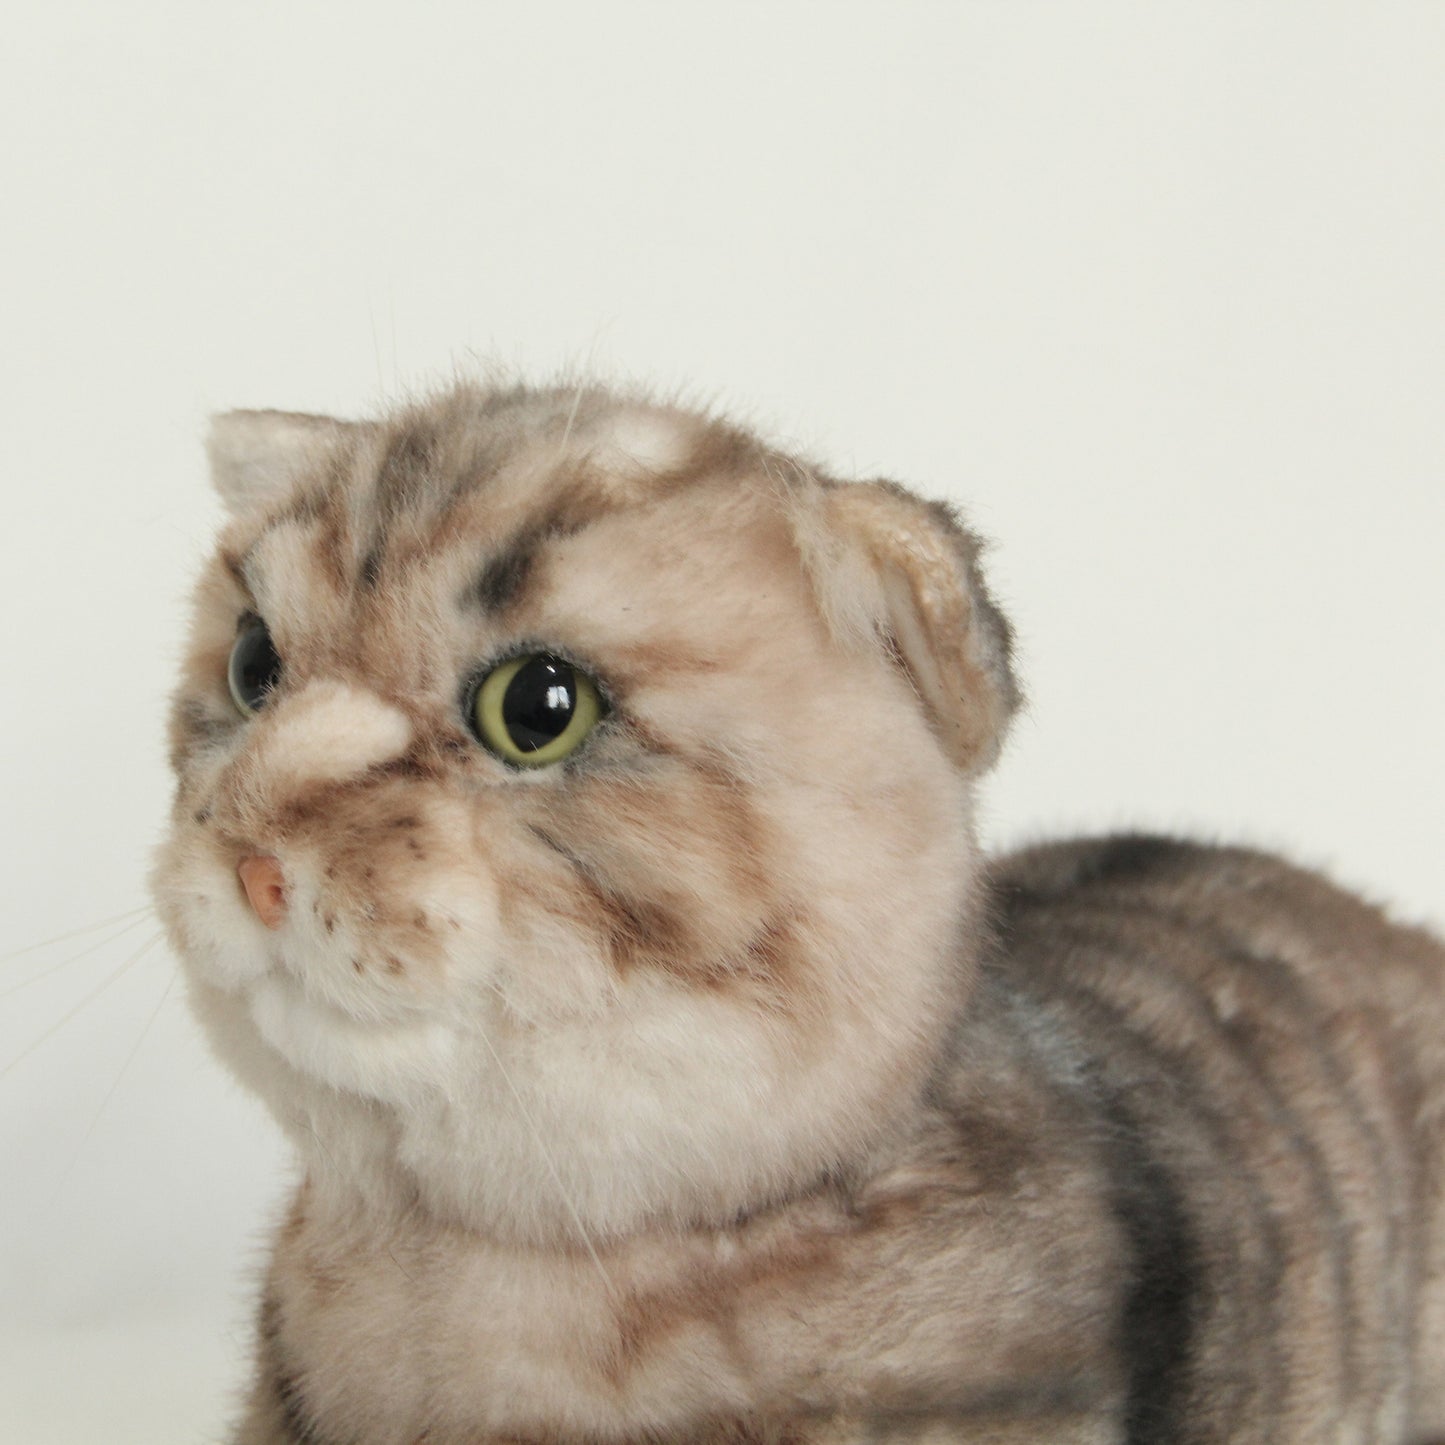 NO.27 Orange and brown striped cat - Chongker